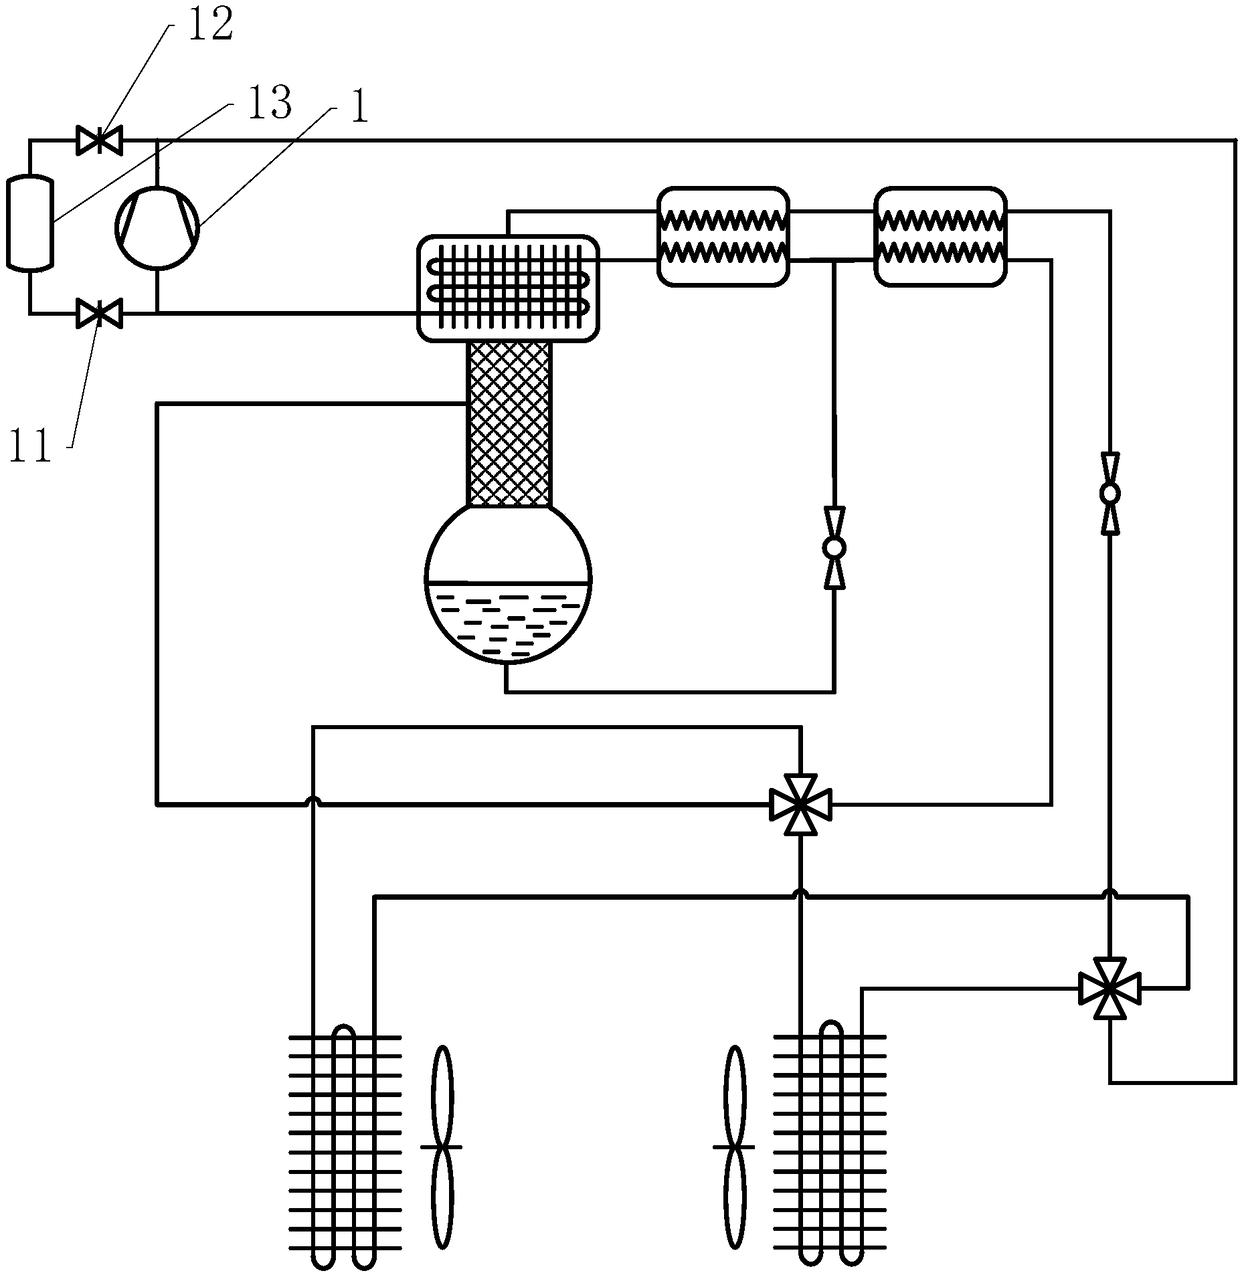 Bidirectional auto-cascade heat pump system